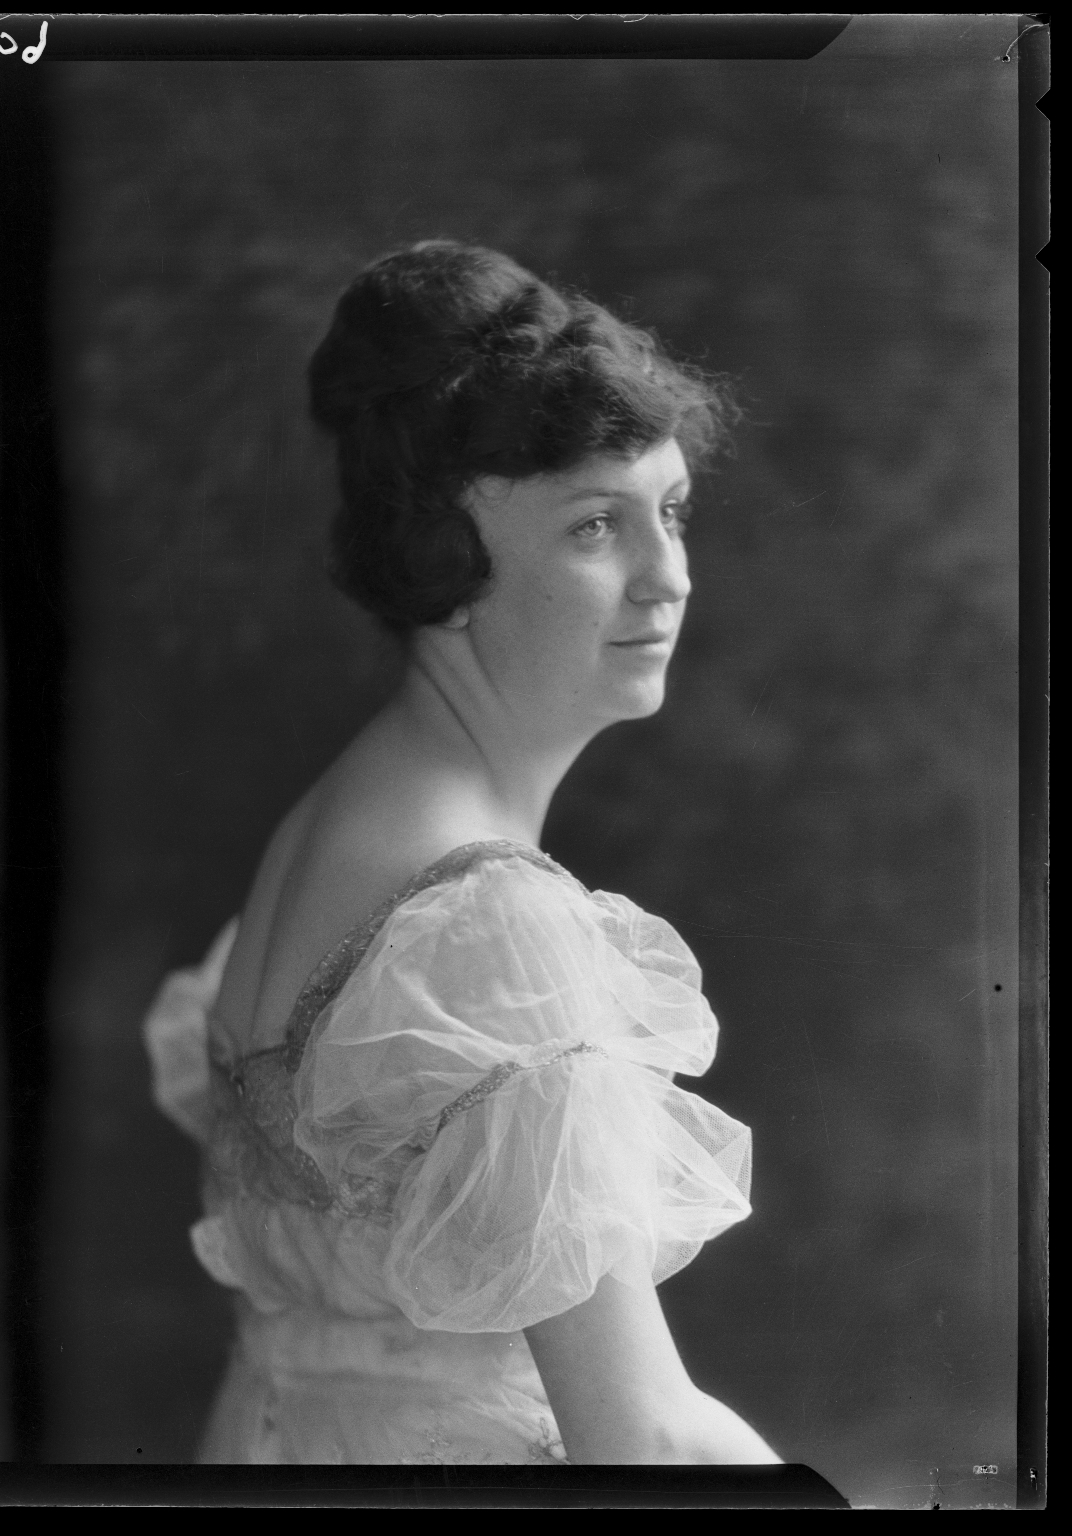 Portraits of Ruth Stone